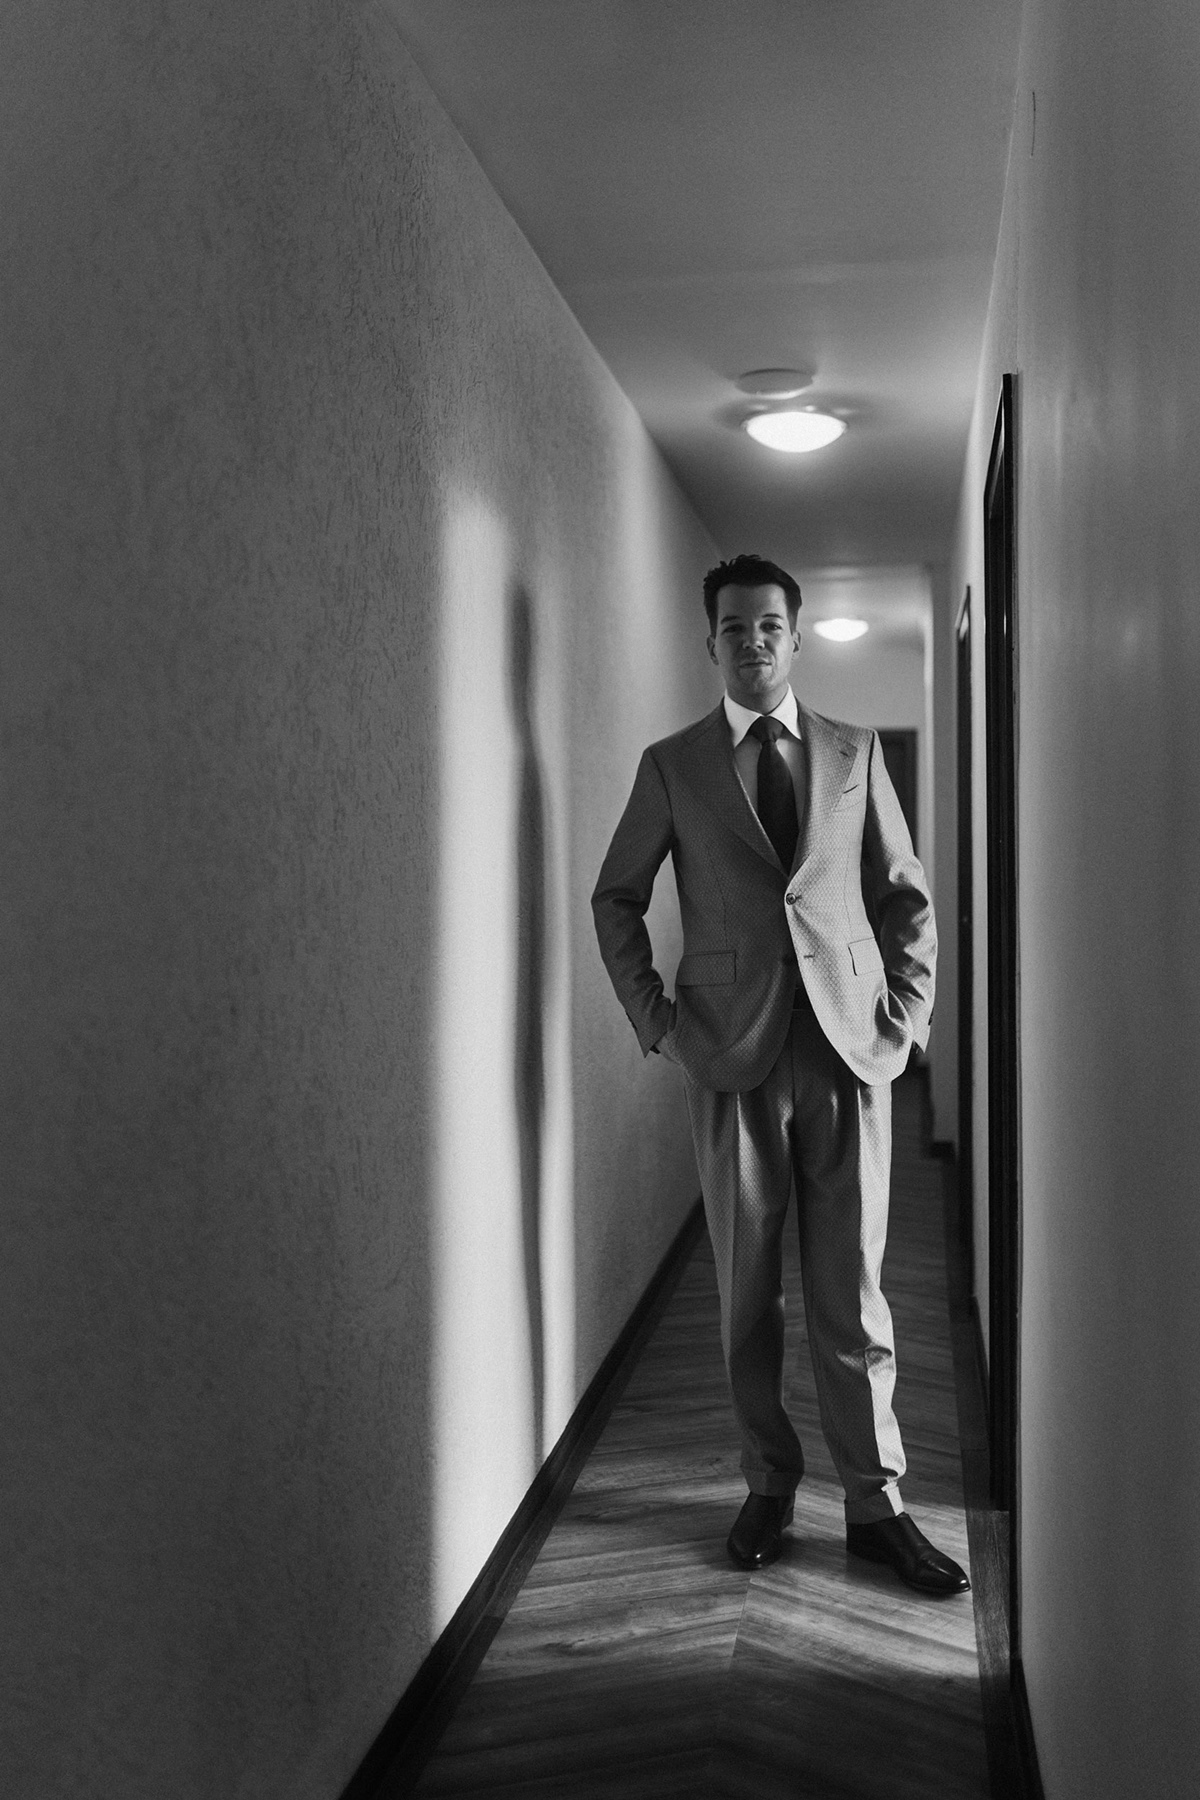 Anzug editorial hotel junior Moody München portrait portrait photography suit Wolfgang M. Schmitt